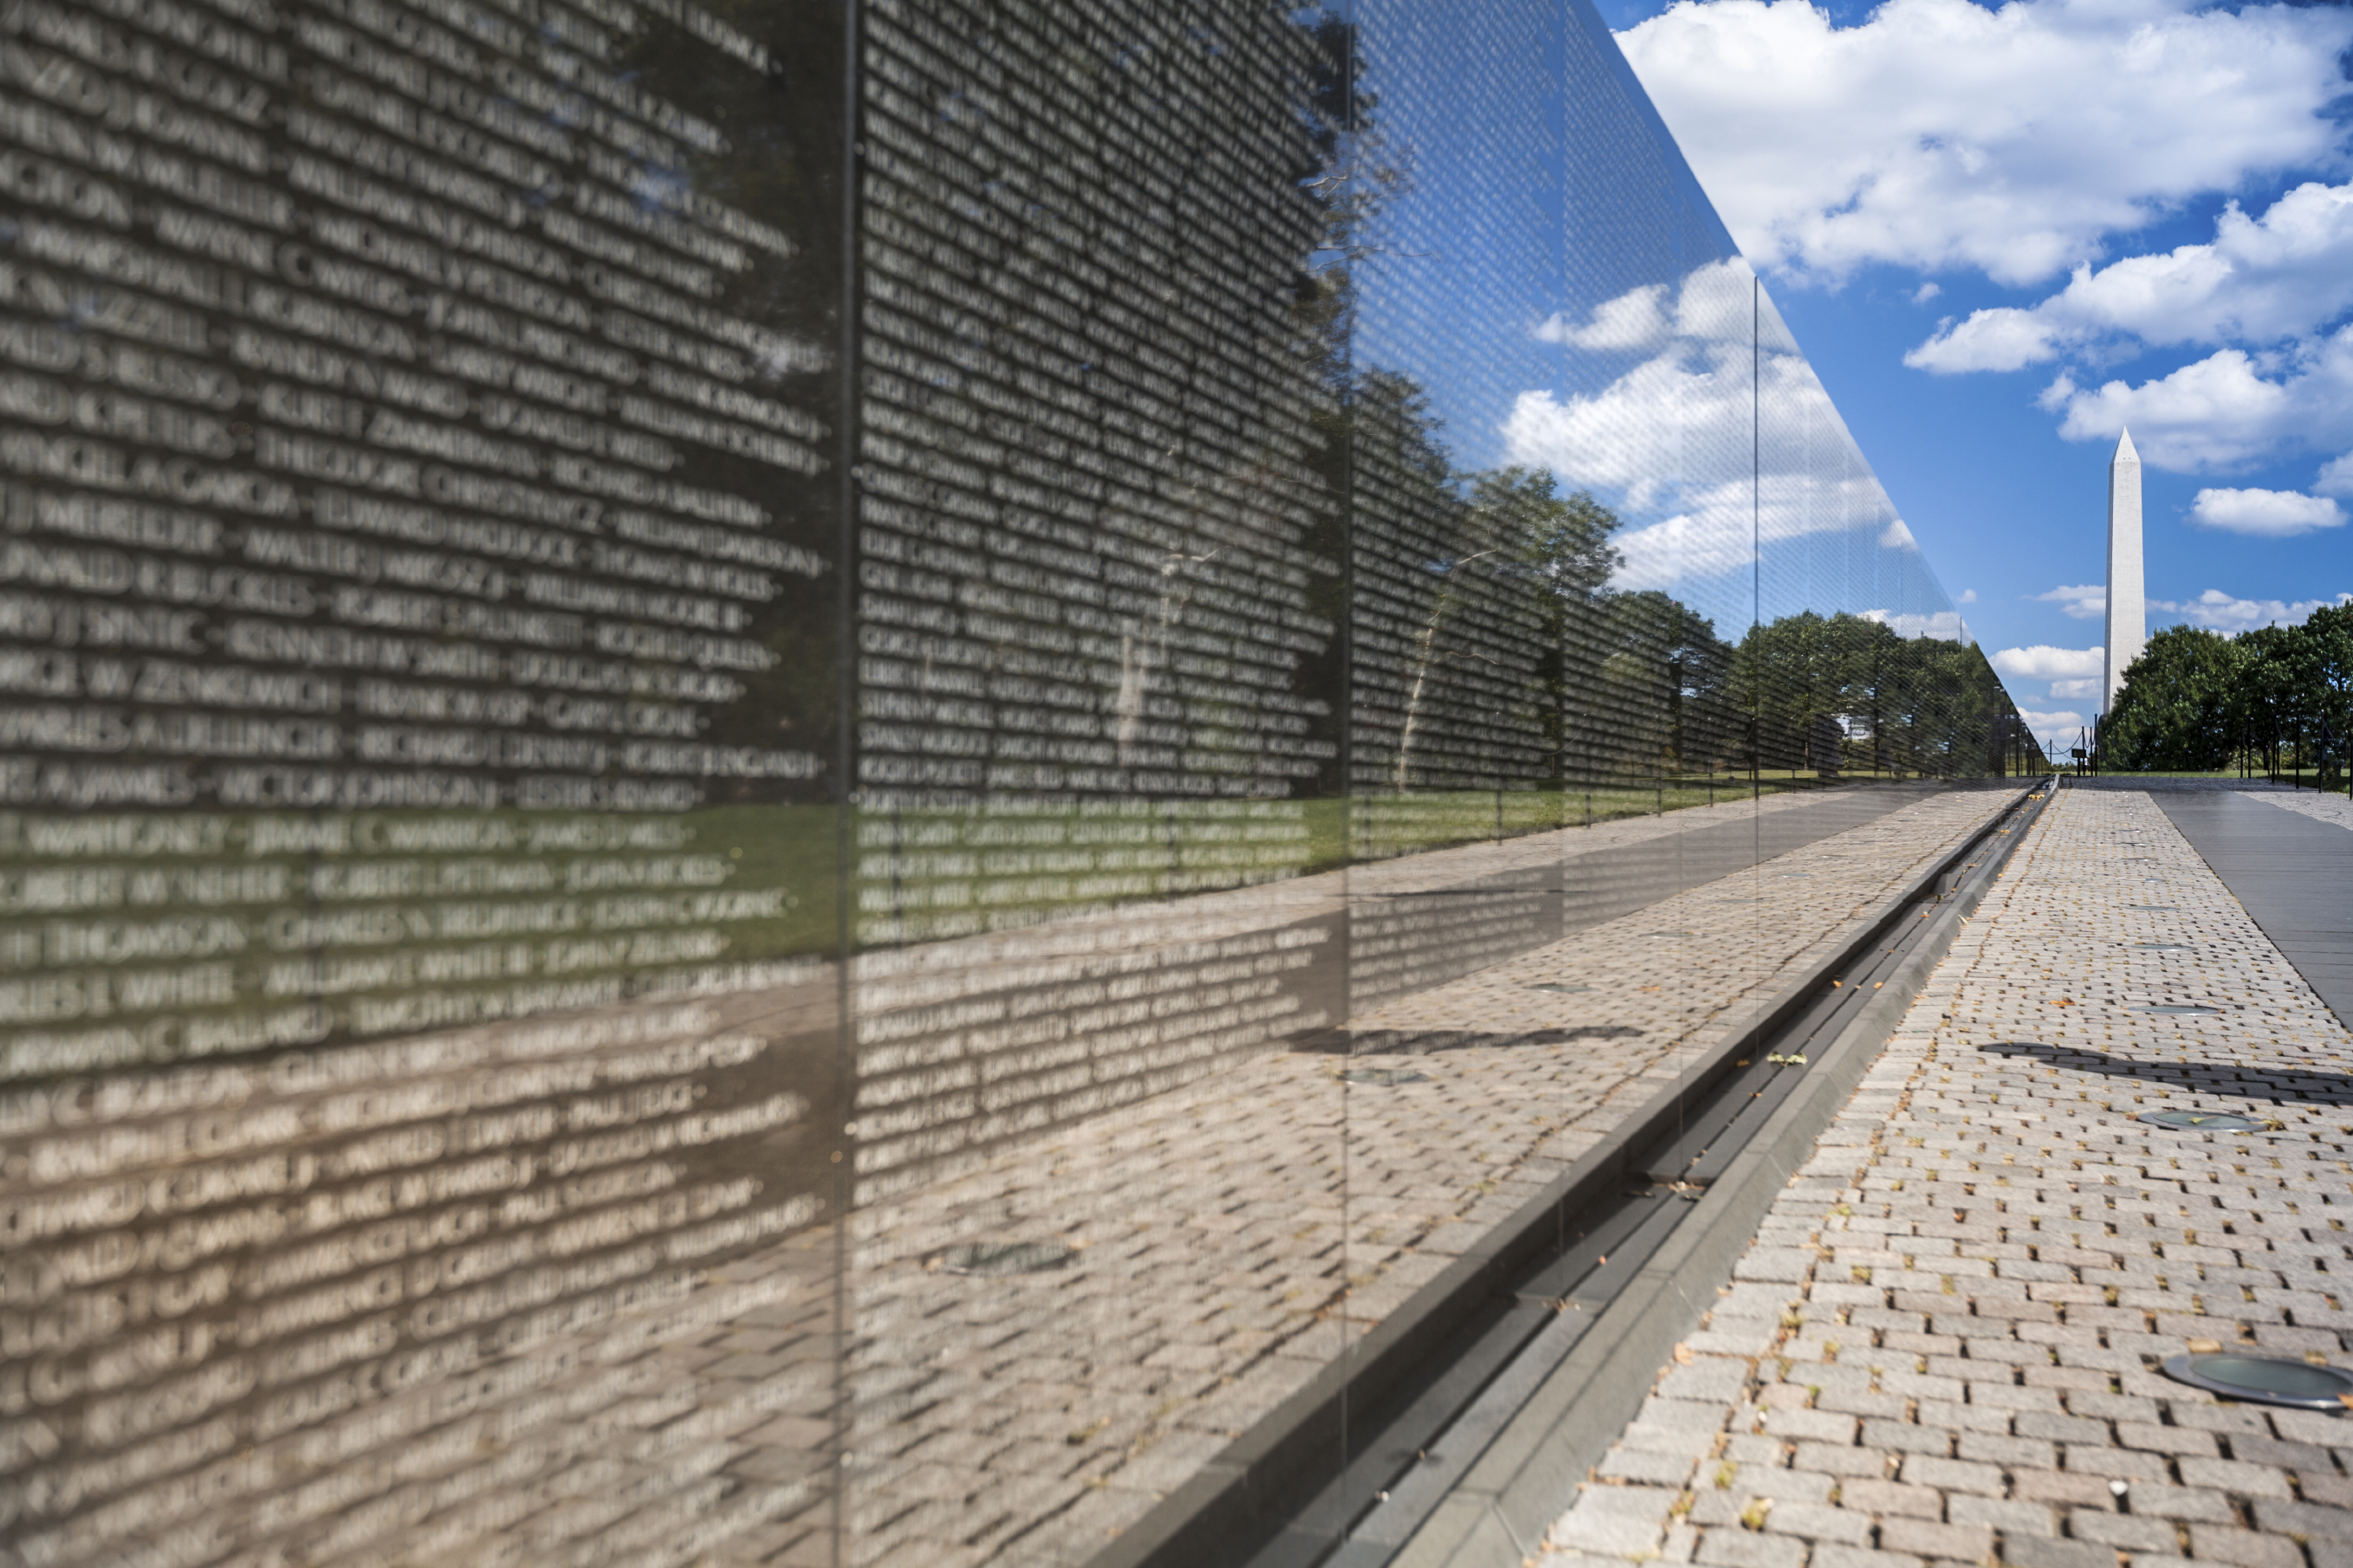 Vietnam veterans memorial photo